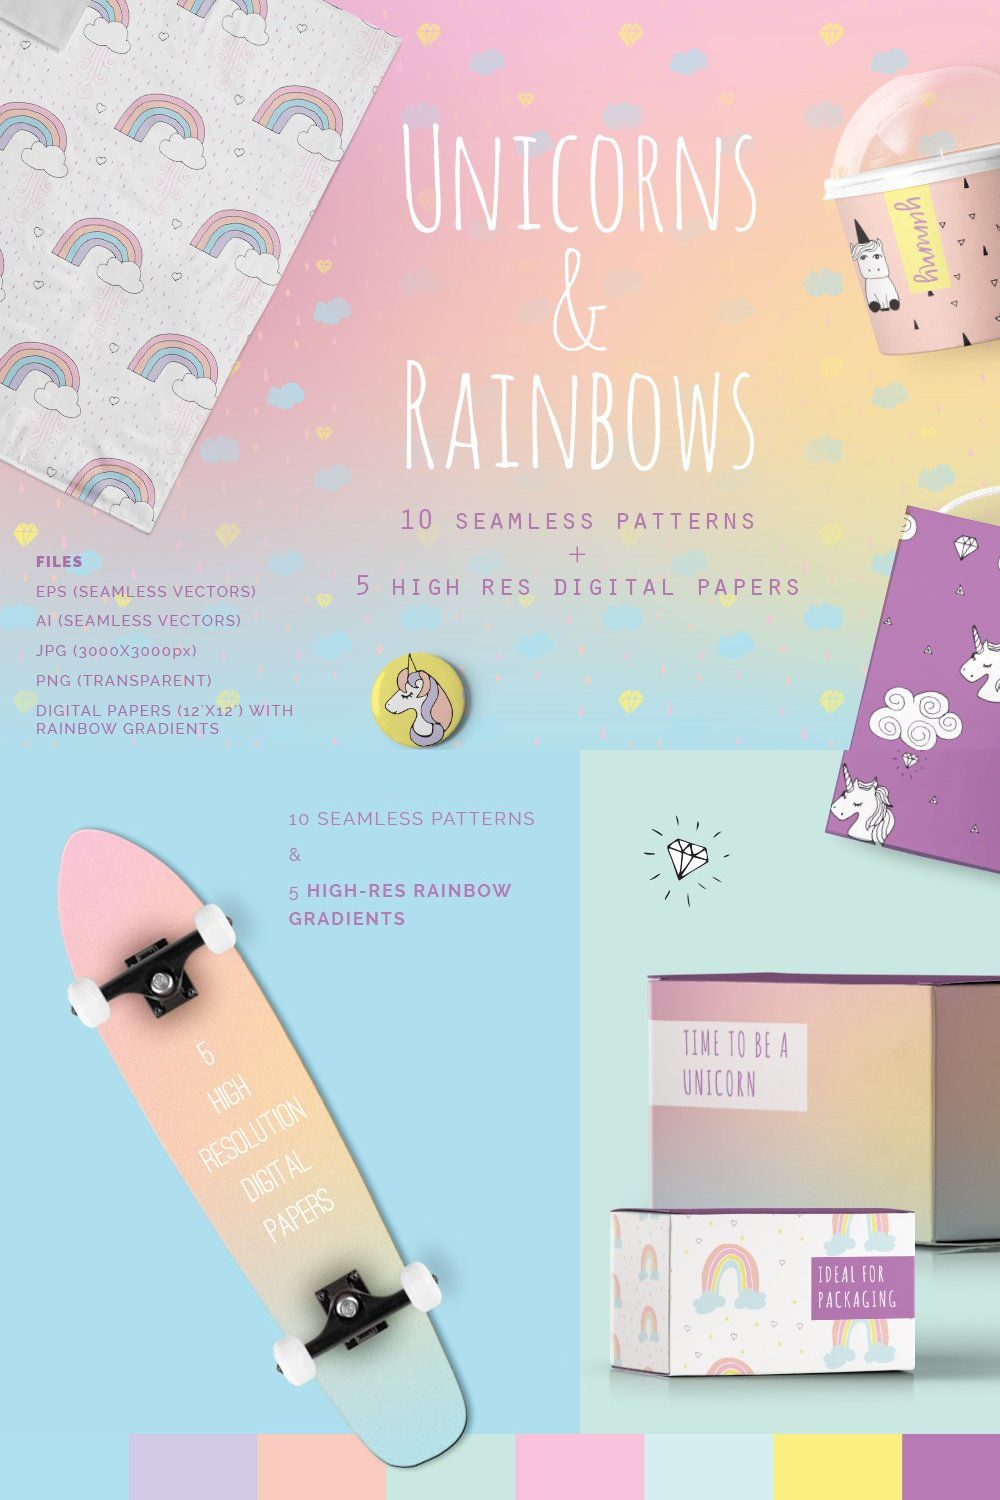 Unicorns & Rainbows Patterns pinterest preview image.